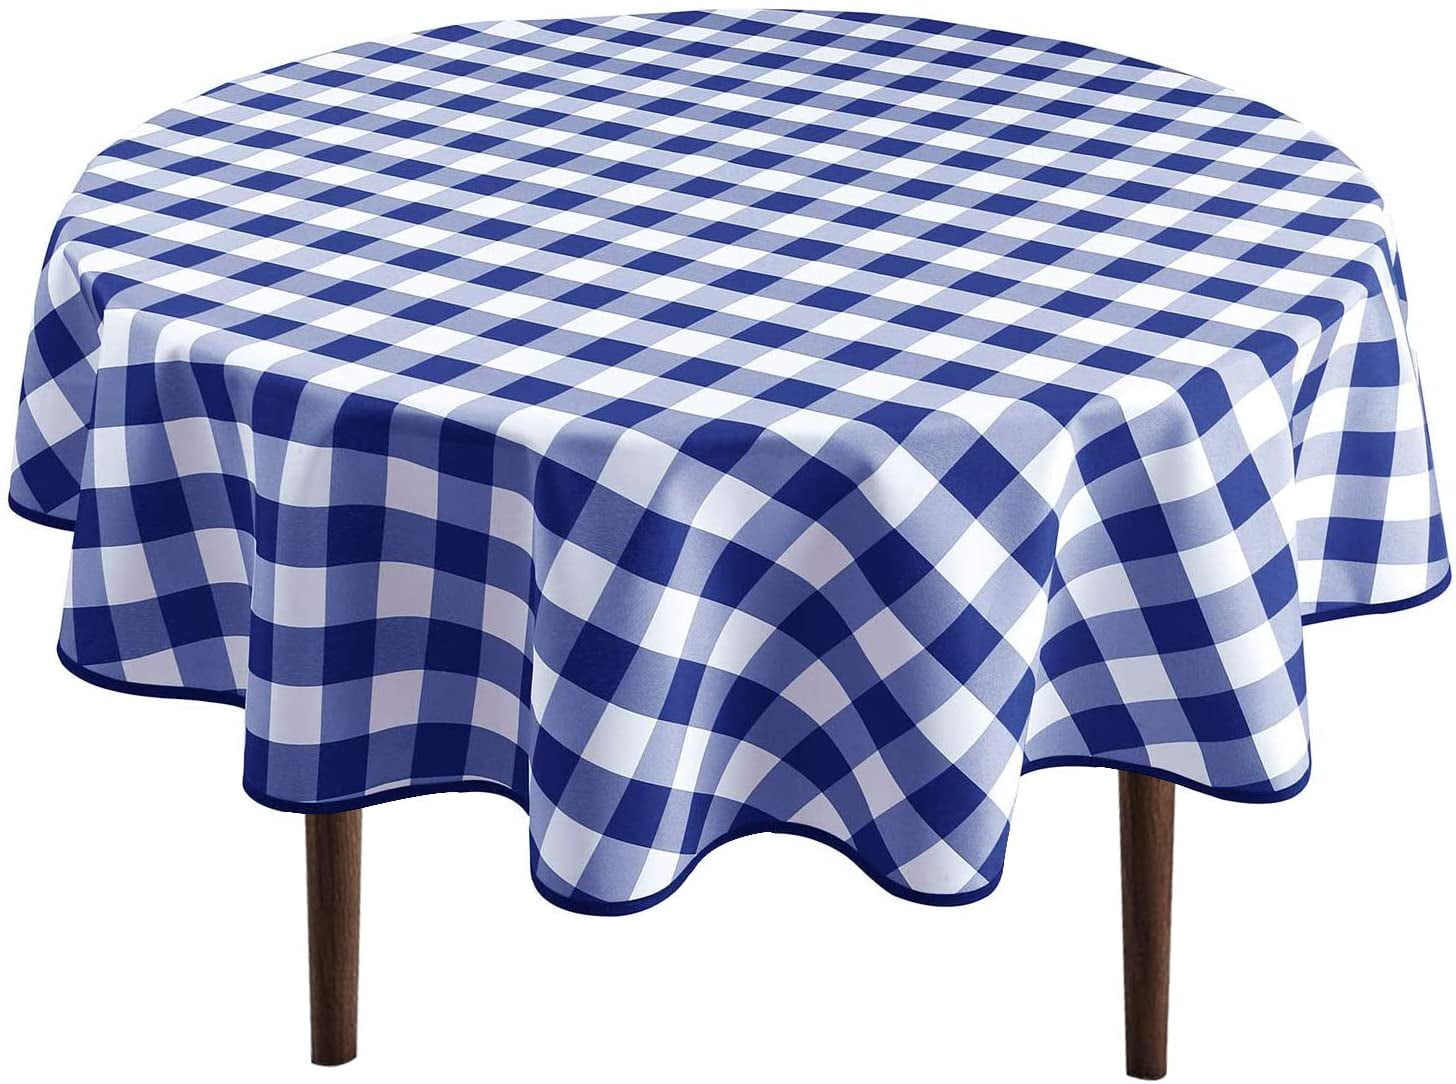 Denim Tablecloth